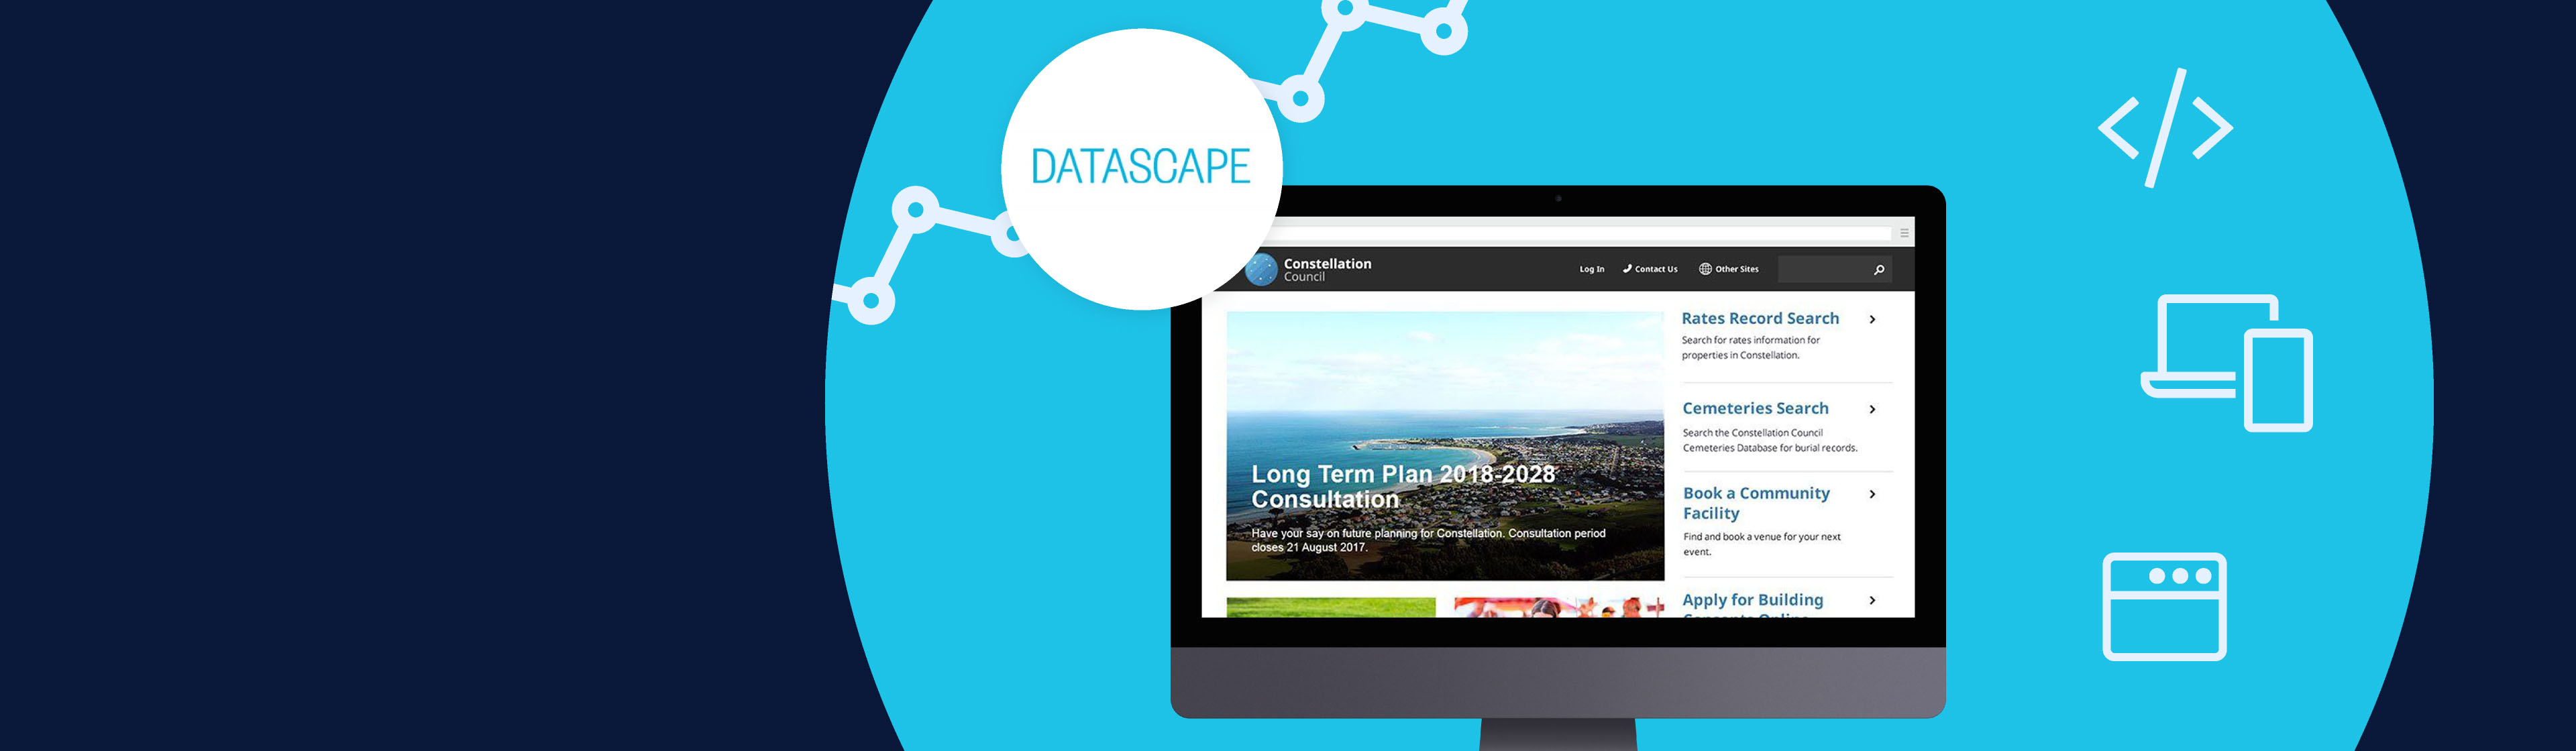 Datascape websites hero image